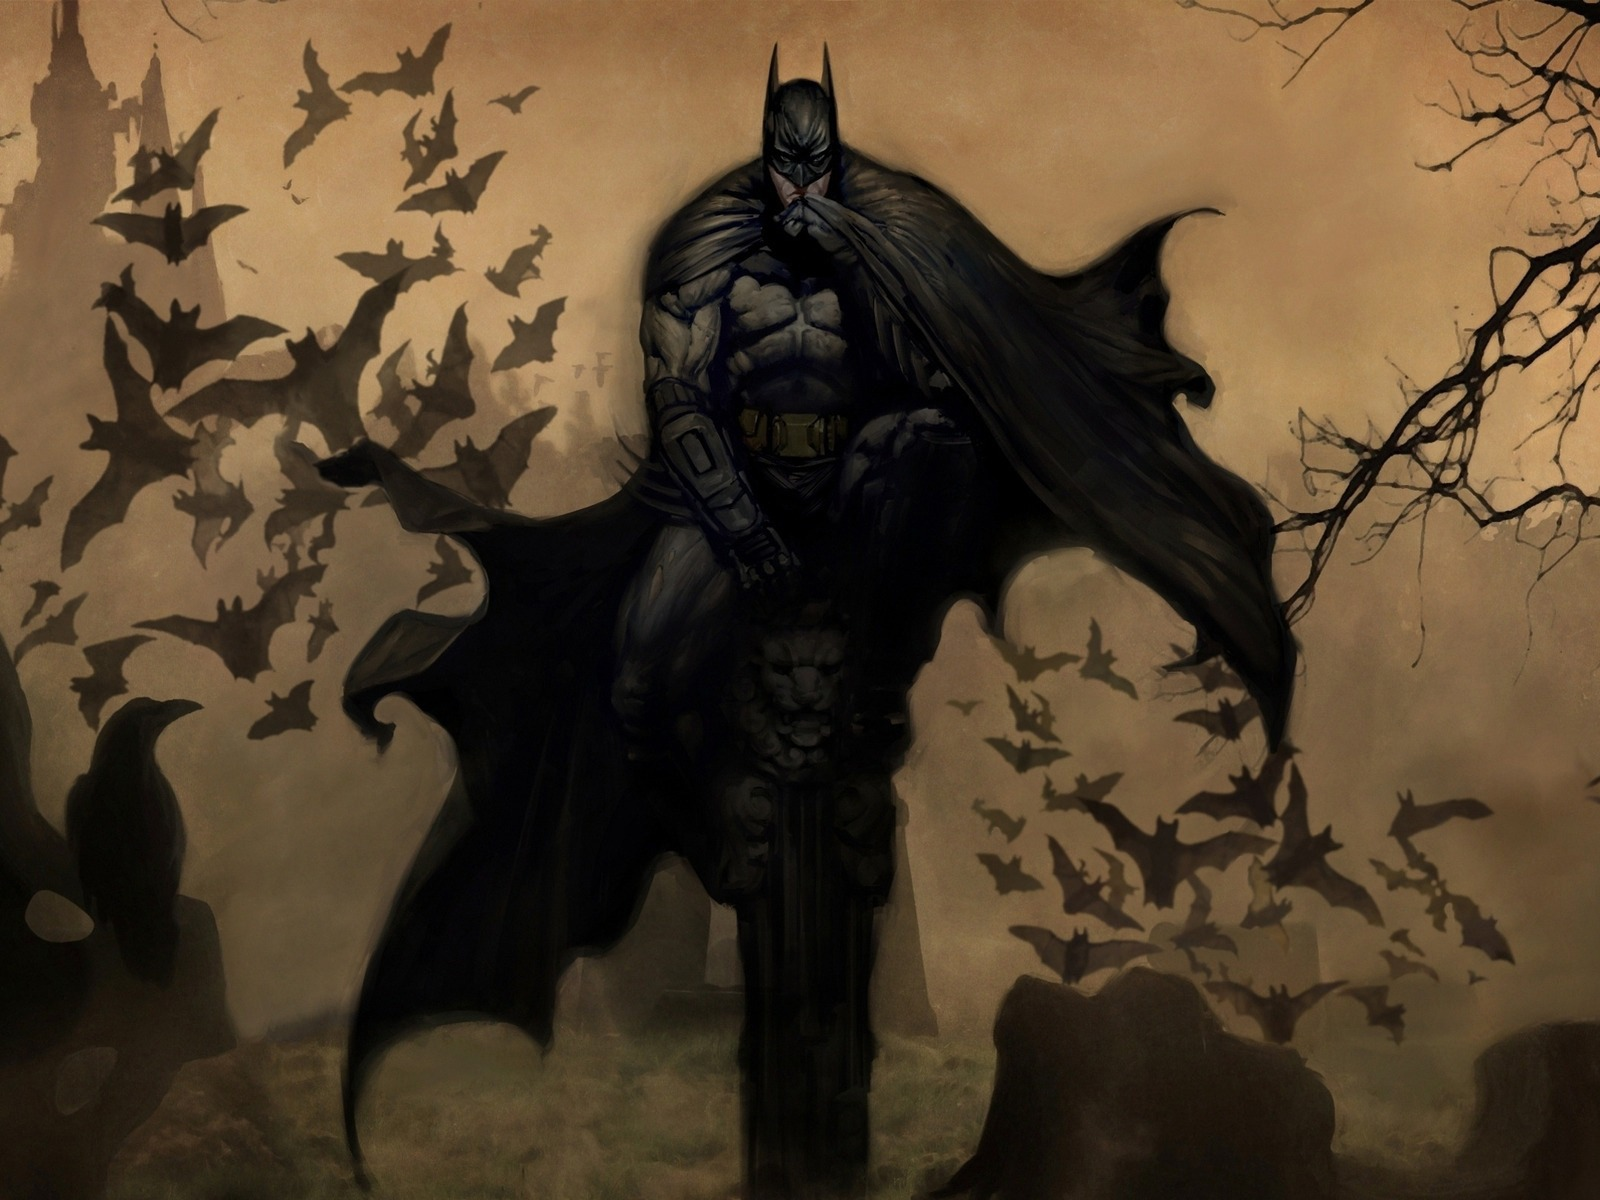 batman silhouette wallpaper